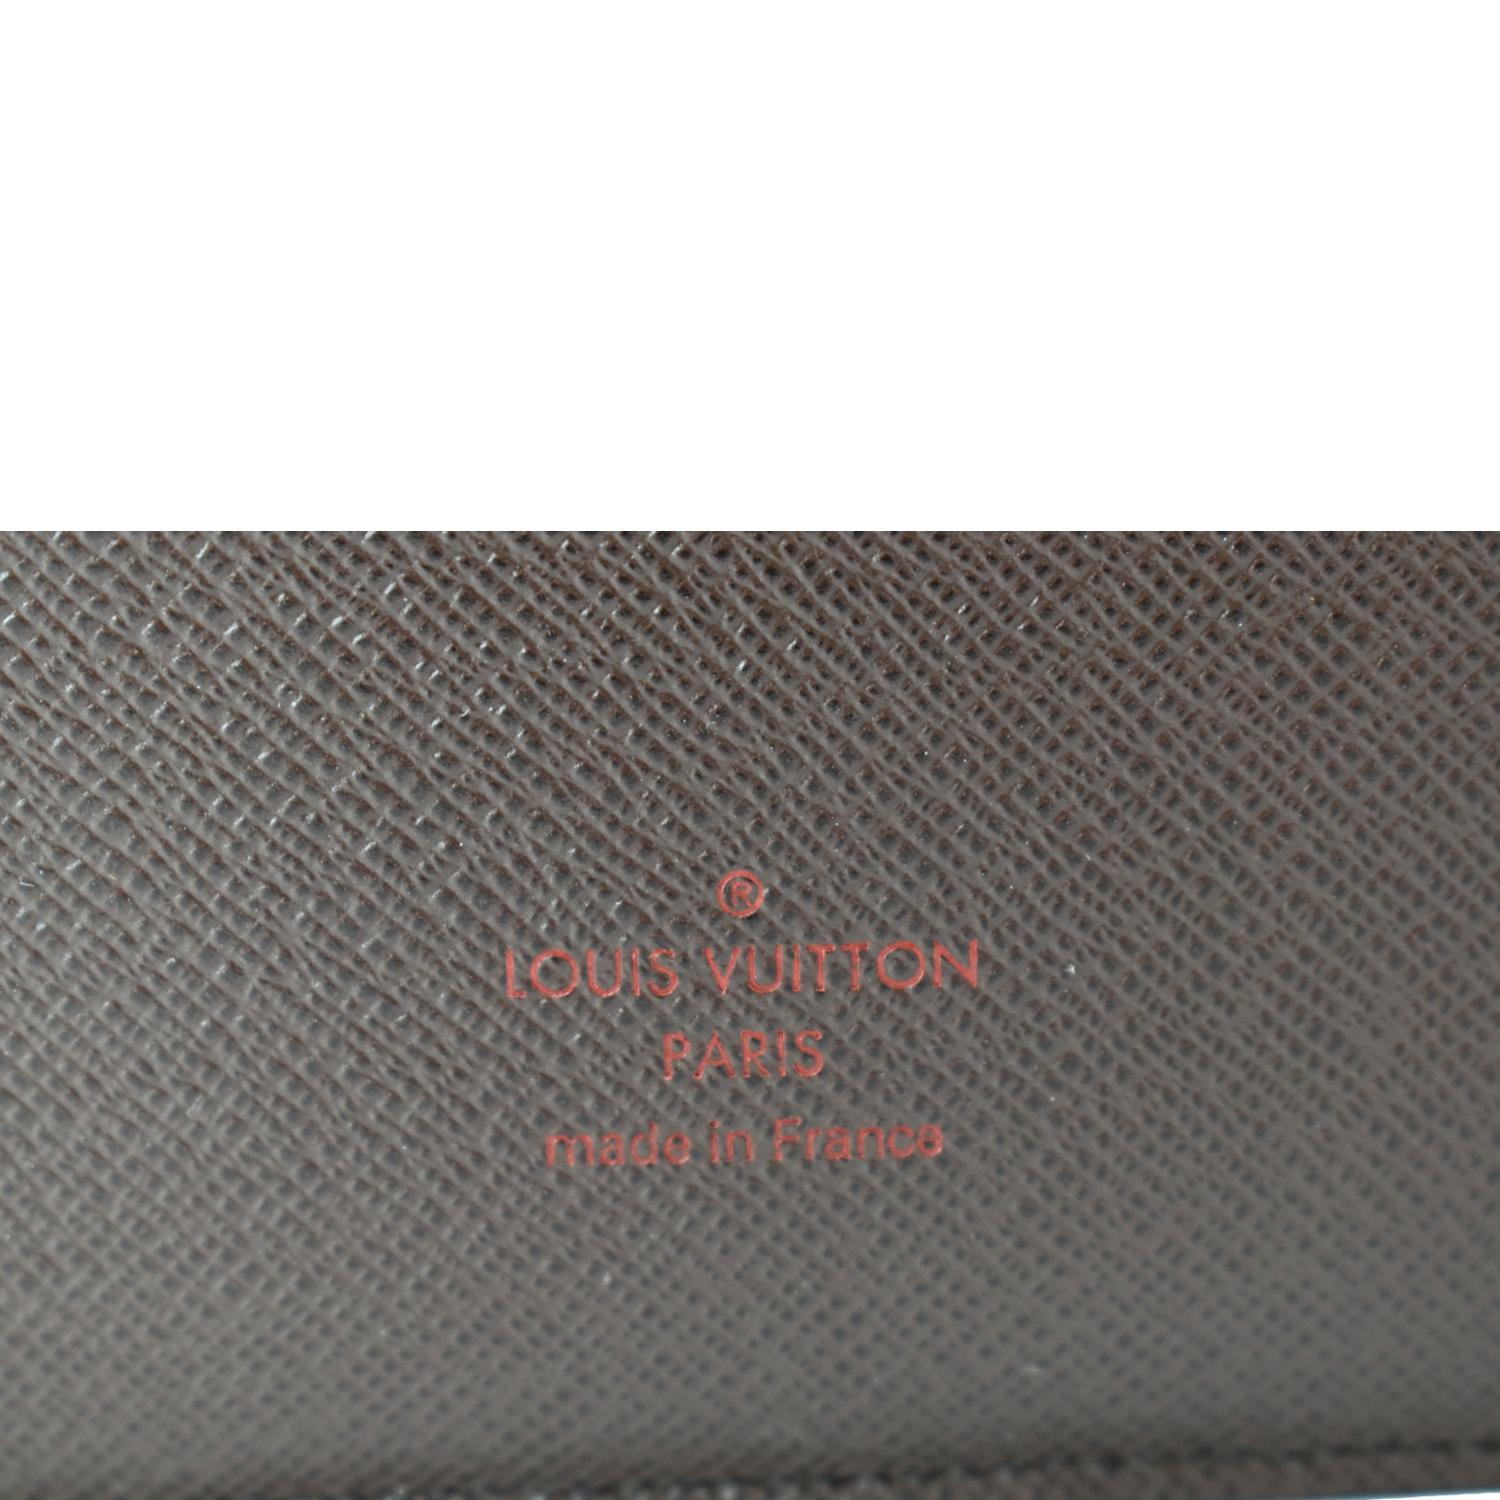 New Louis Vuitton Damier Ebene Large Ring Agenda Planner Cover GM R20107 🤎